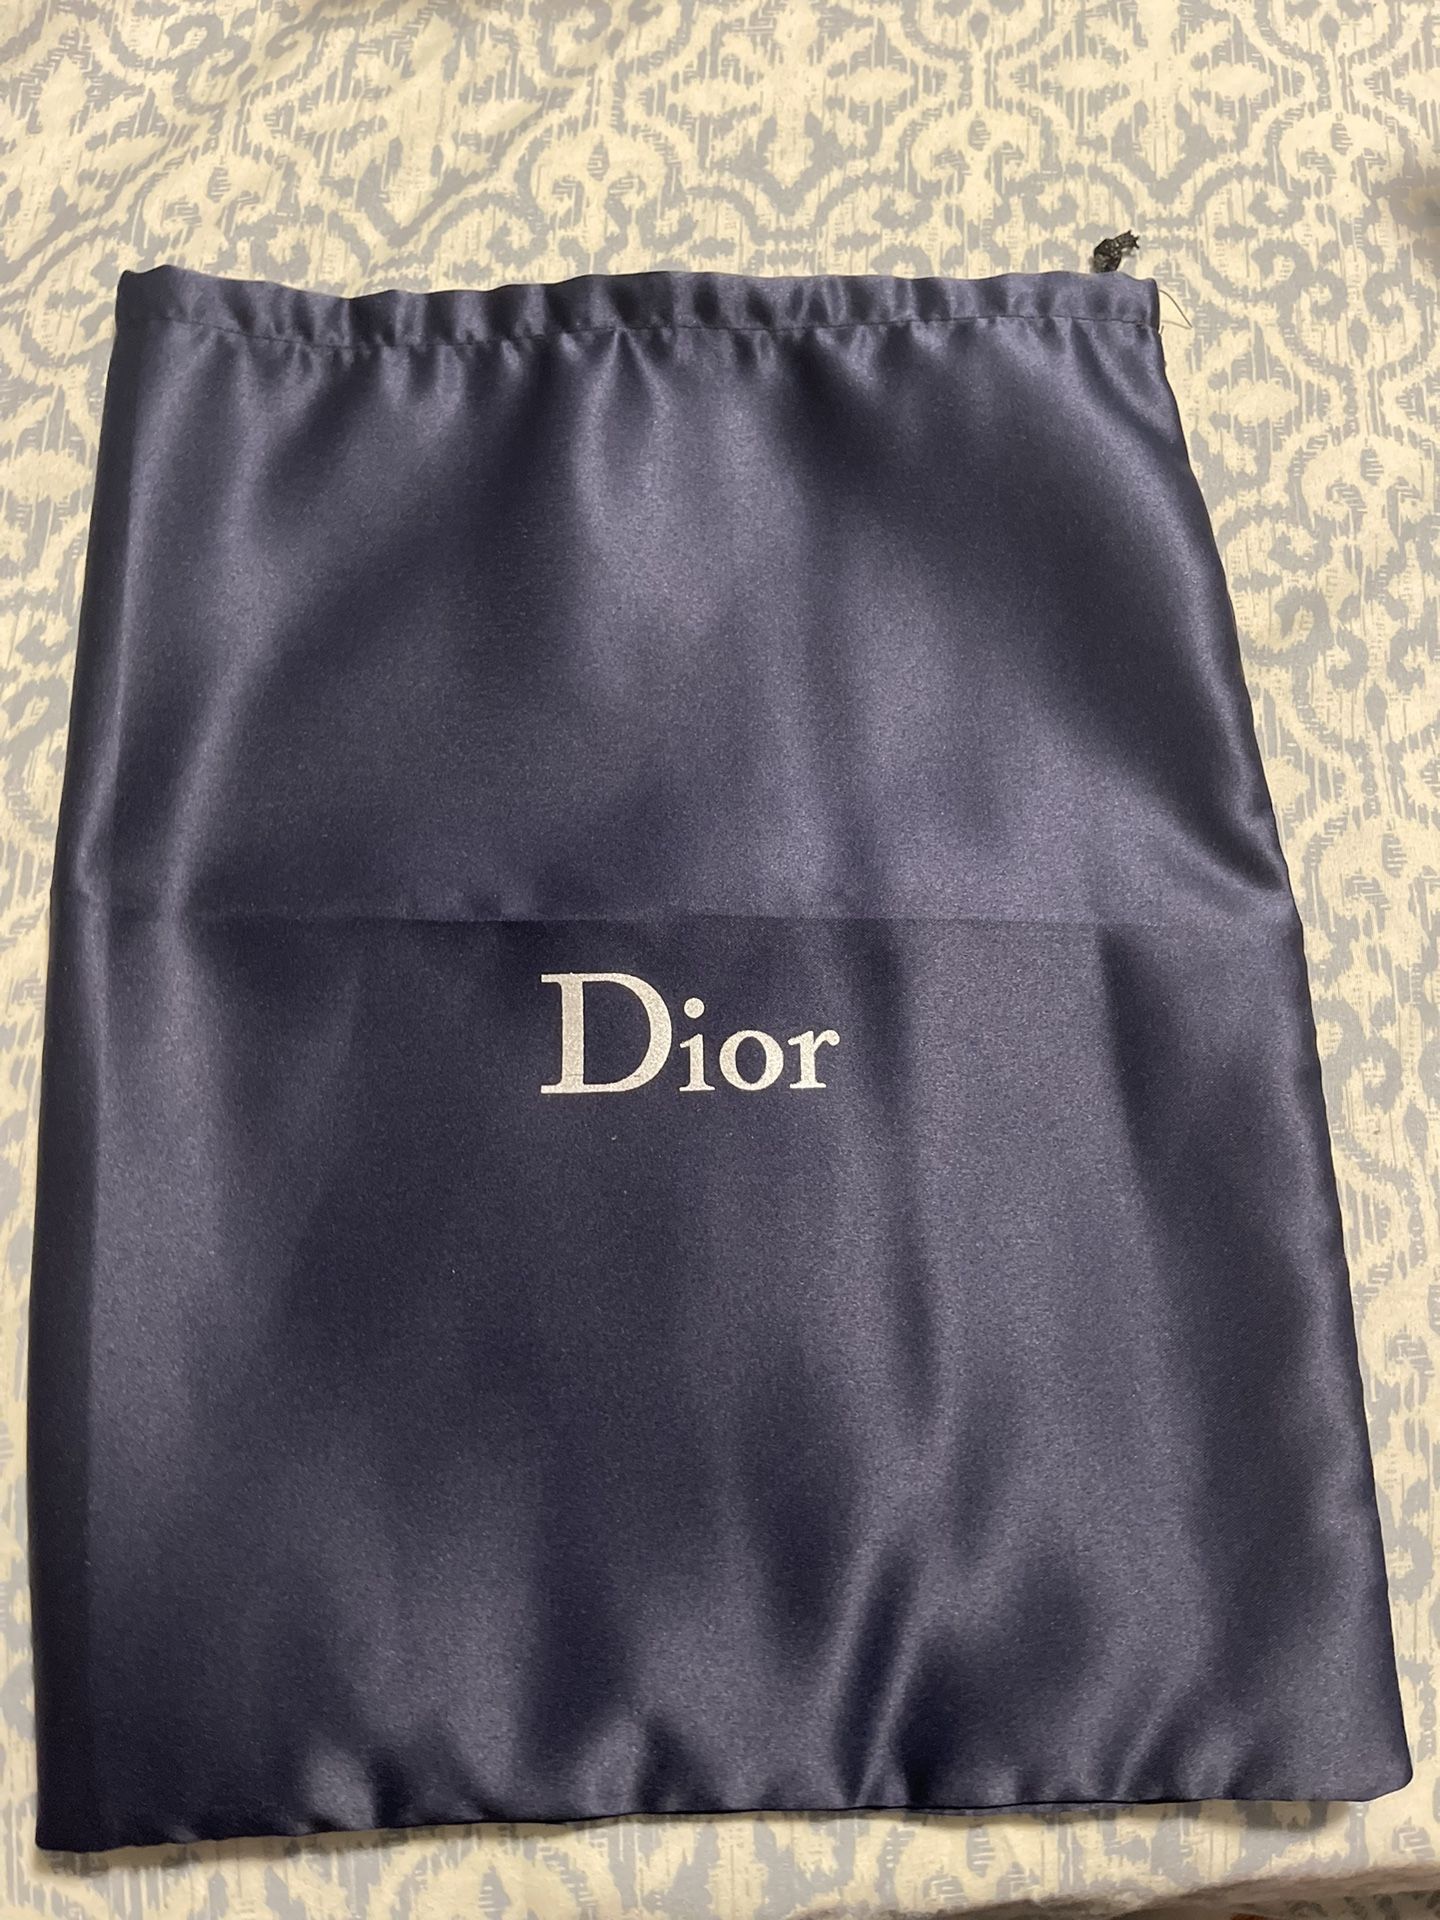 Christian Dior’s Men 